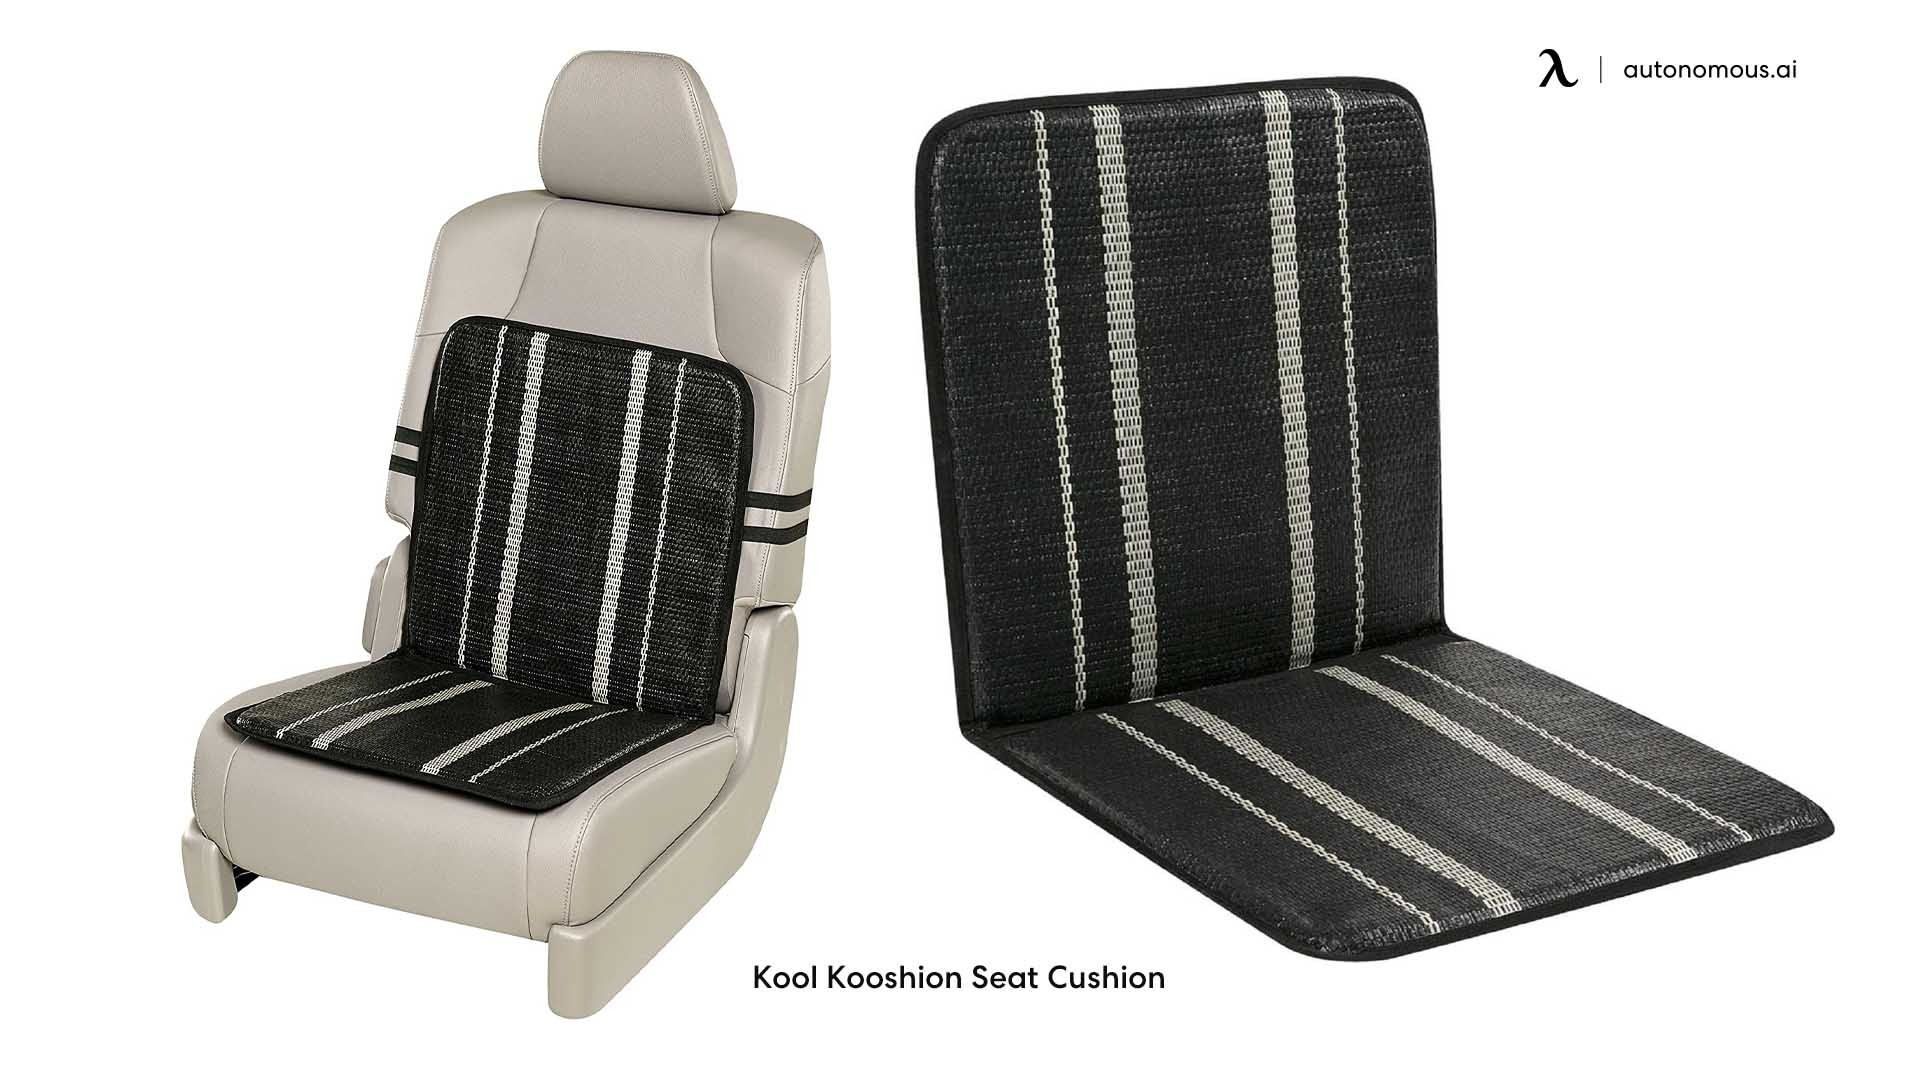 Kool Kooshion Seat Cushion